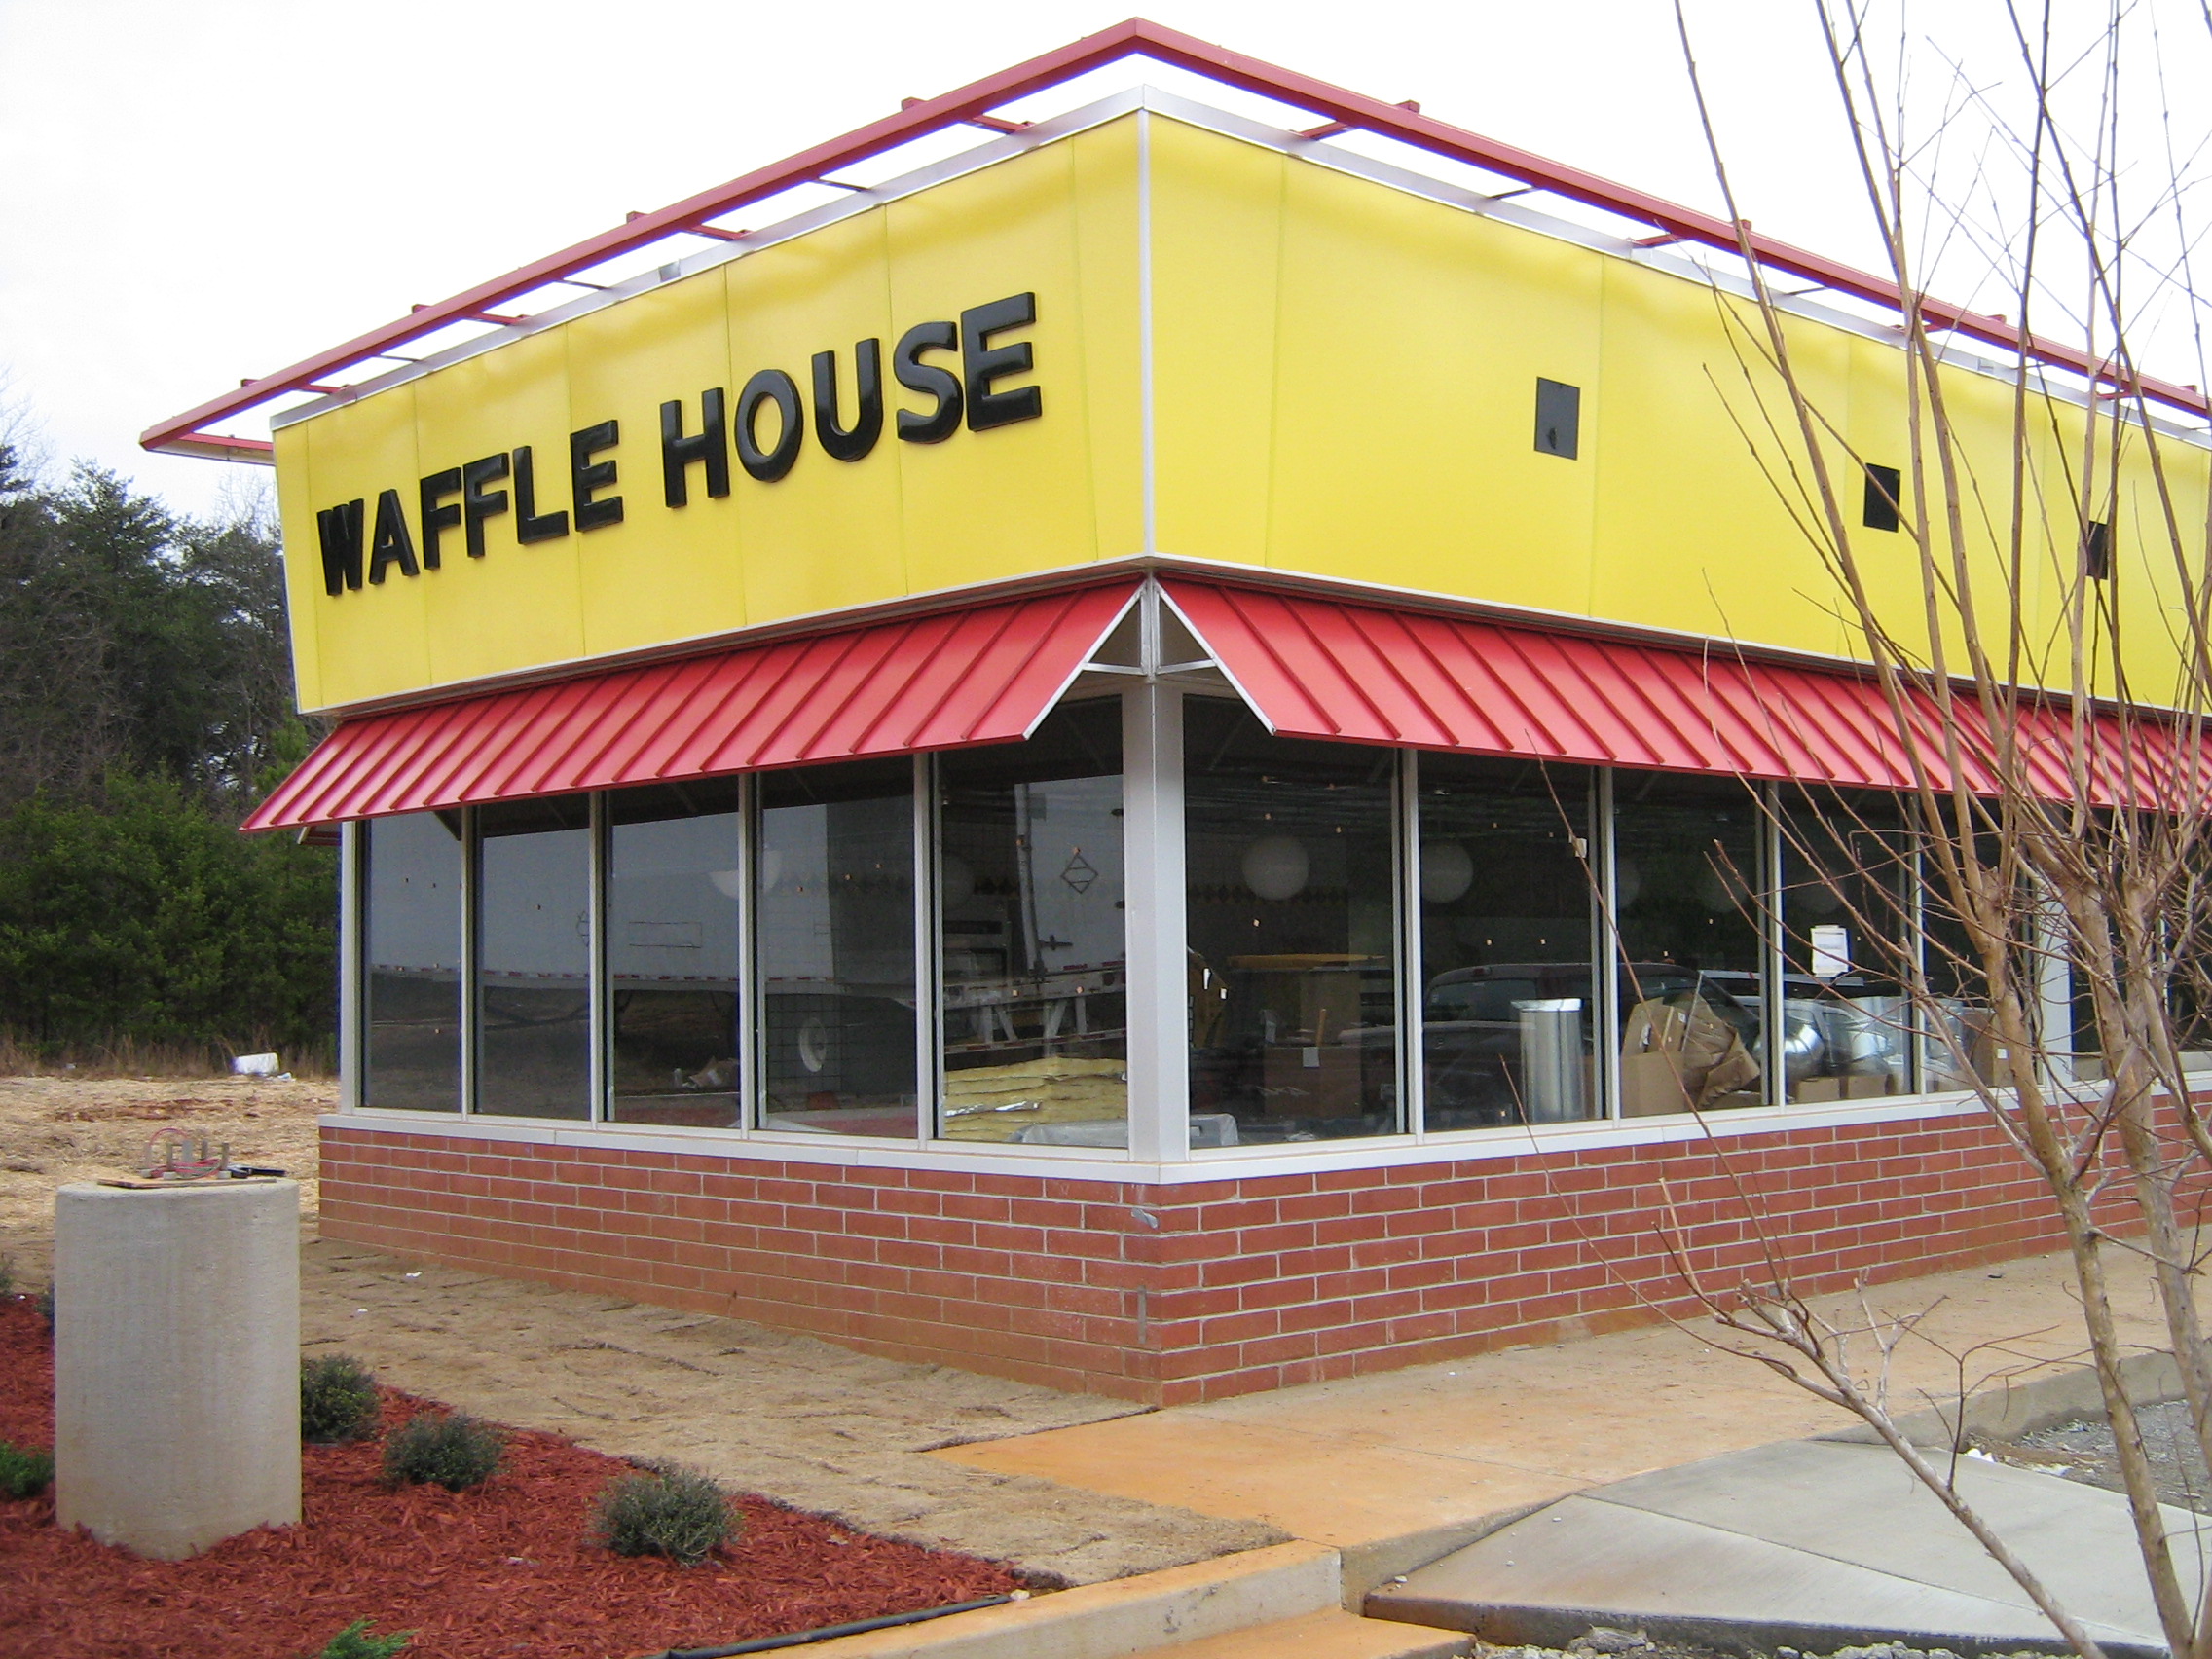 waffle house